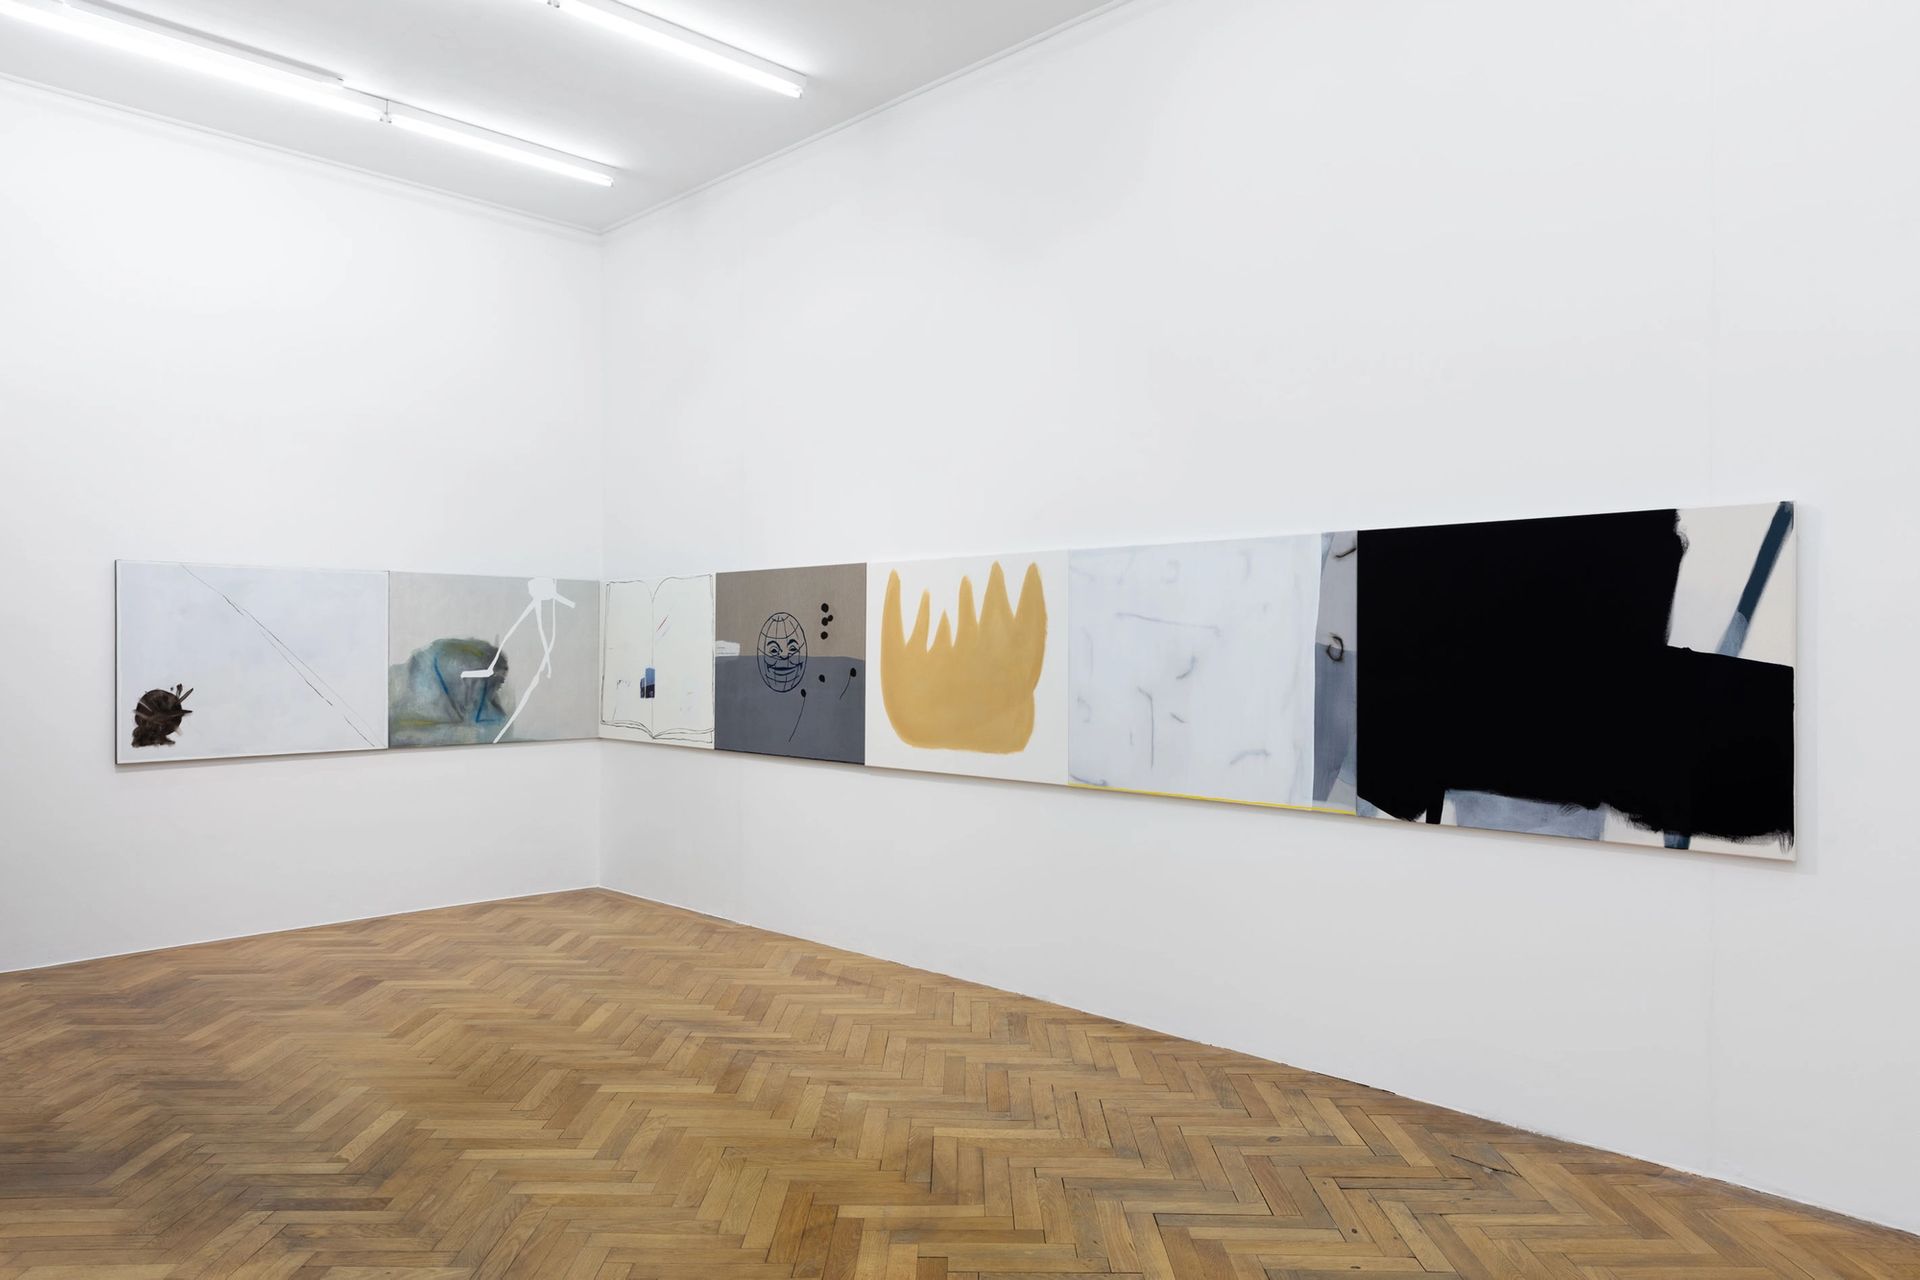 Exhibition View: Malte Zenses, ,Im Regio 3, totale Verwirrung,, 2020, photo: Sebastian Kissel